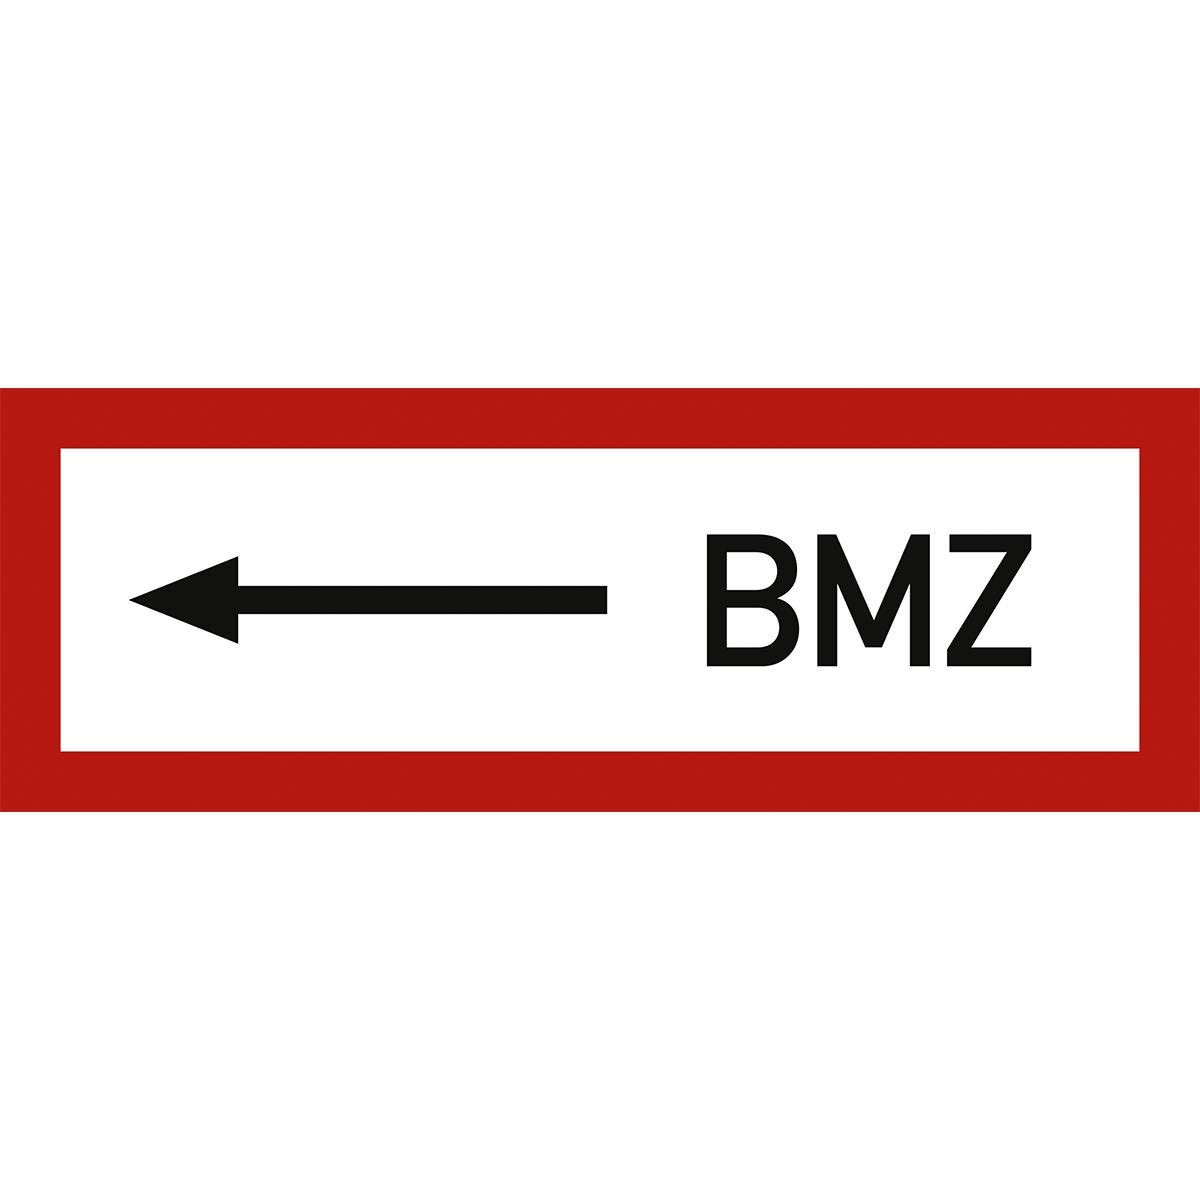 Hinweisschild mit dem Symbol+Text: BMZ linksweisend